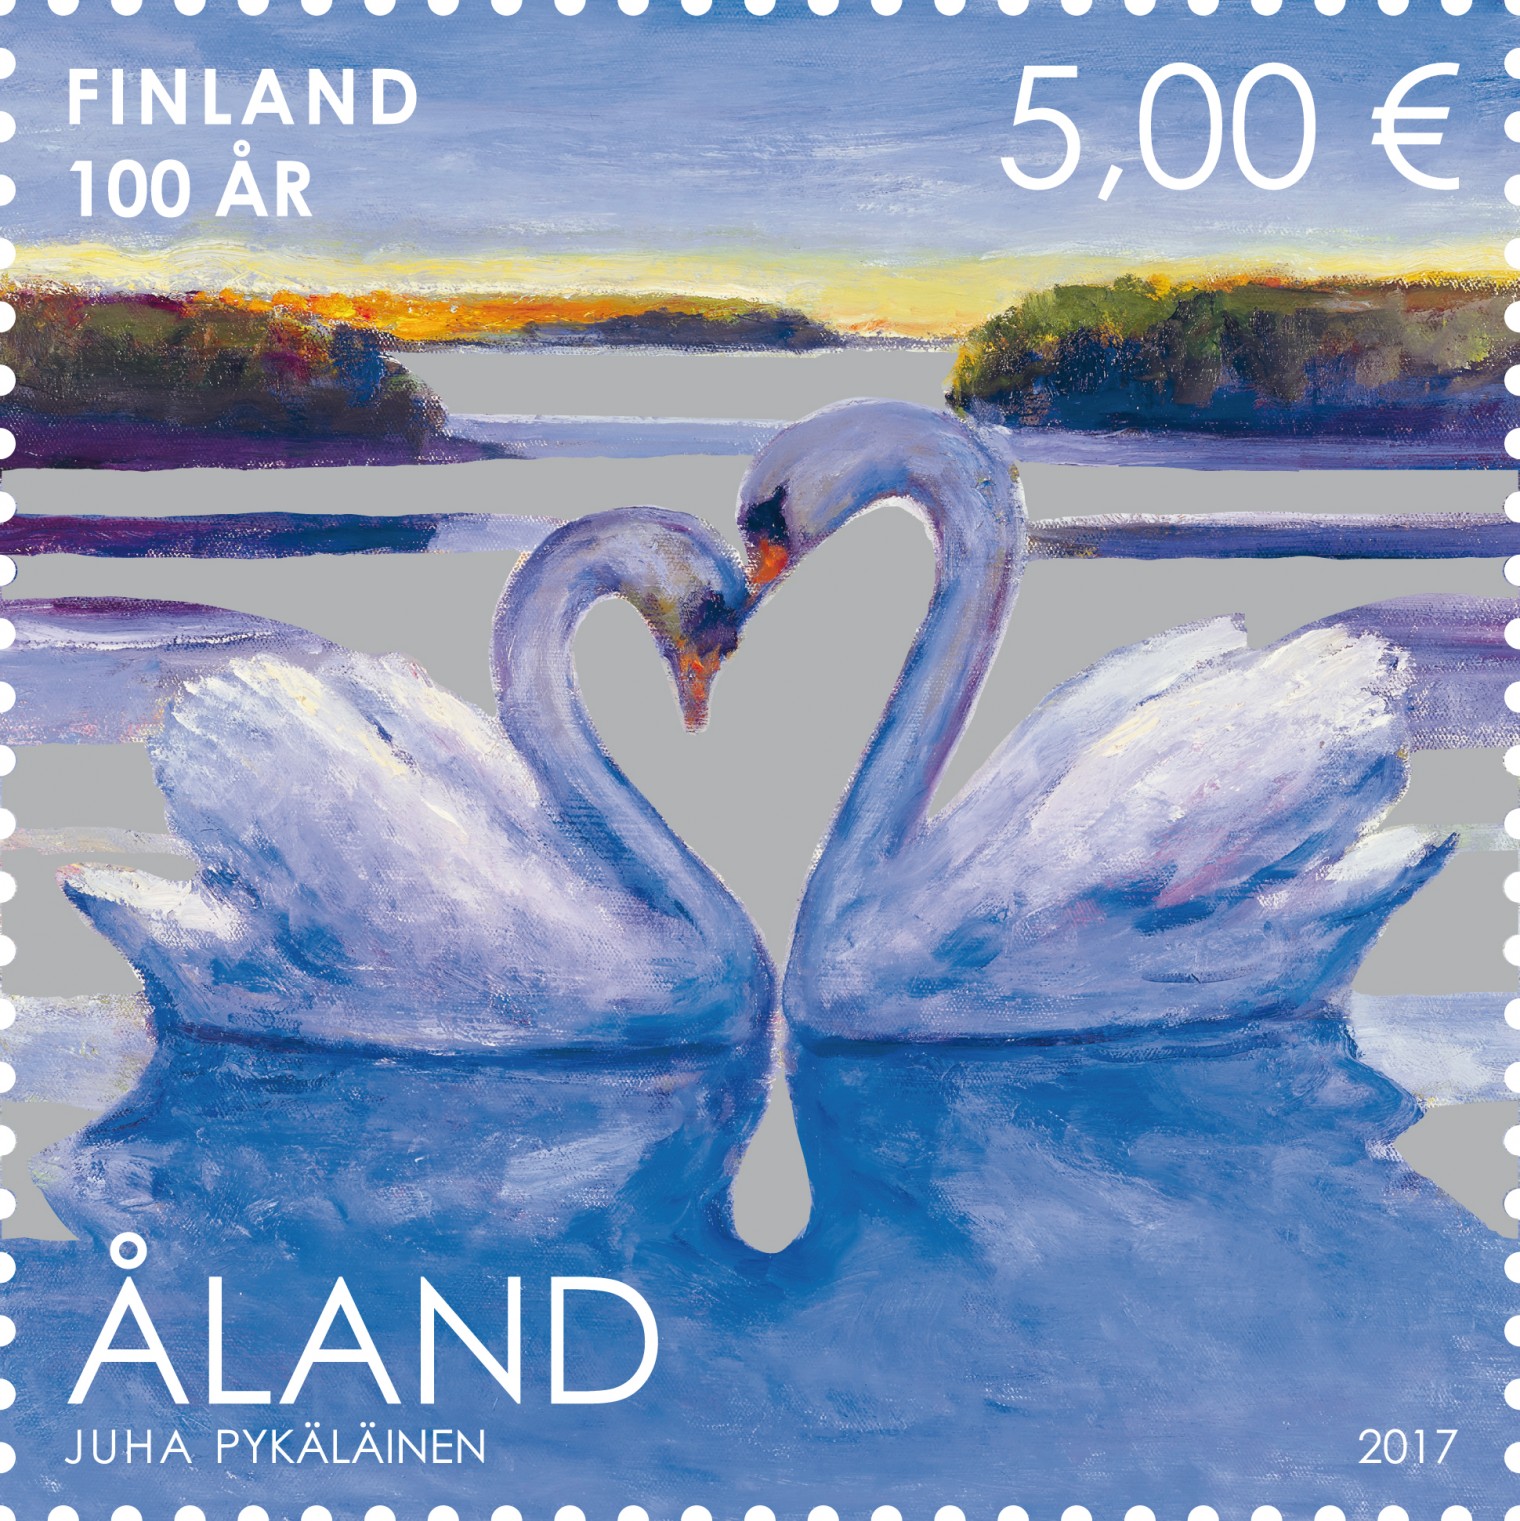 Centenary of Finland honoured by Åland stamp | www.alandstamps.com